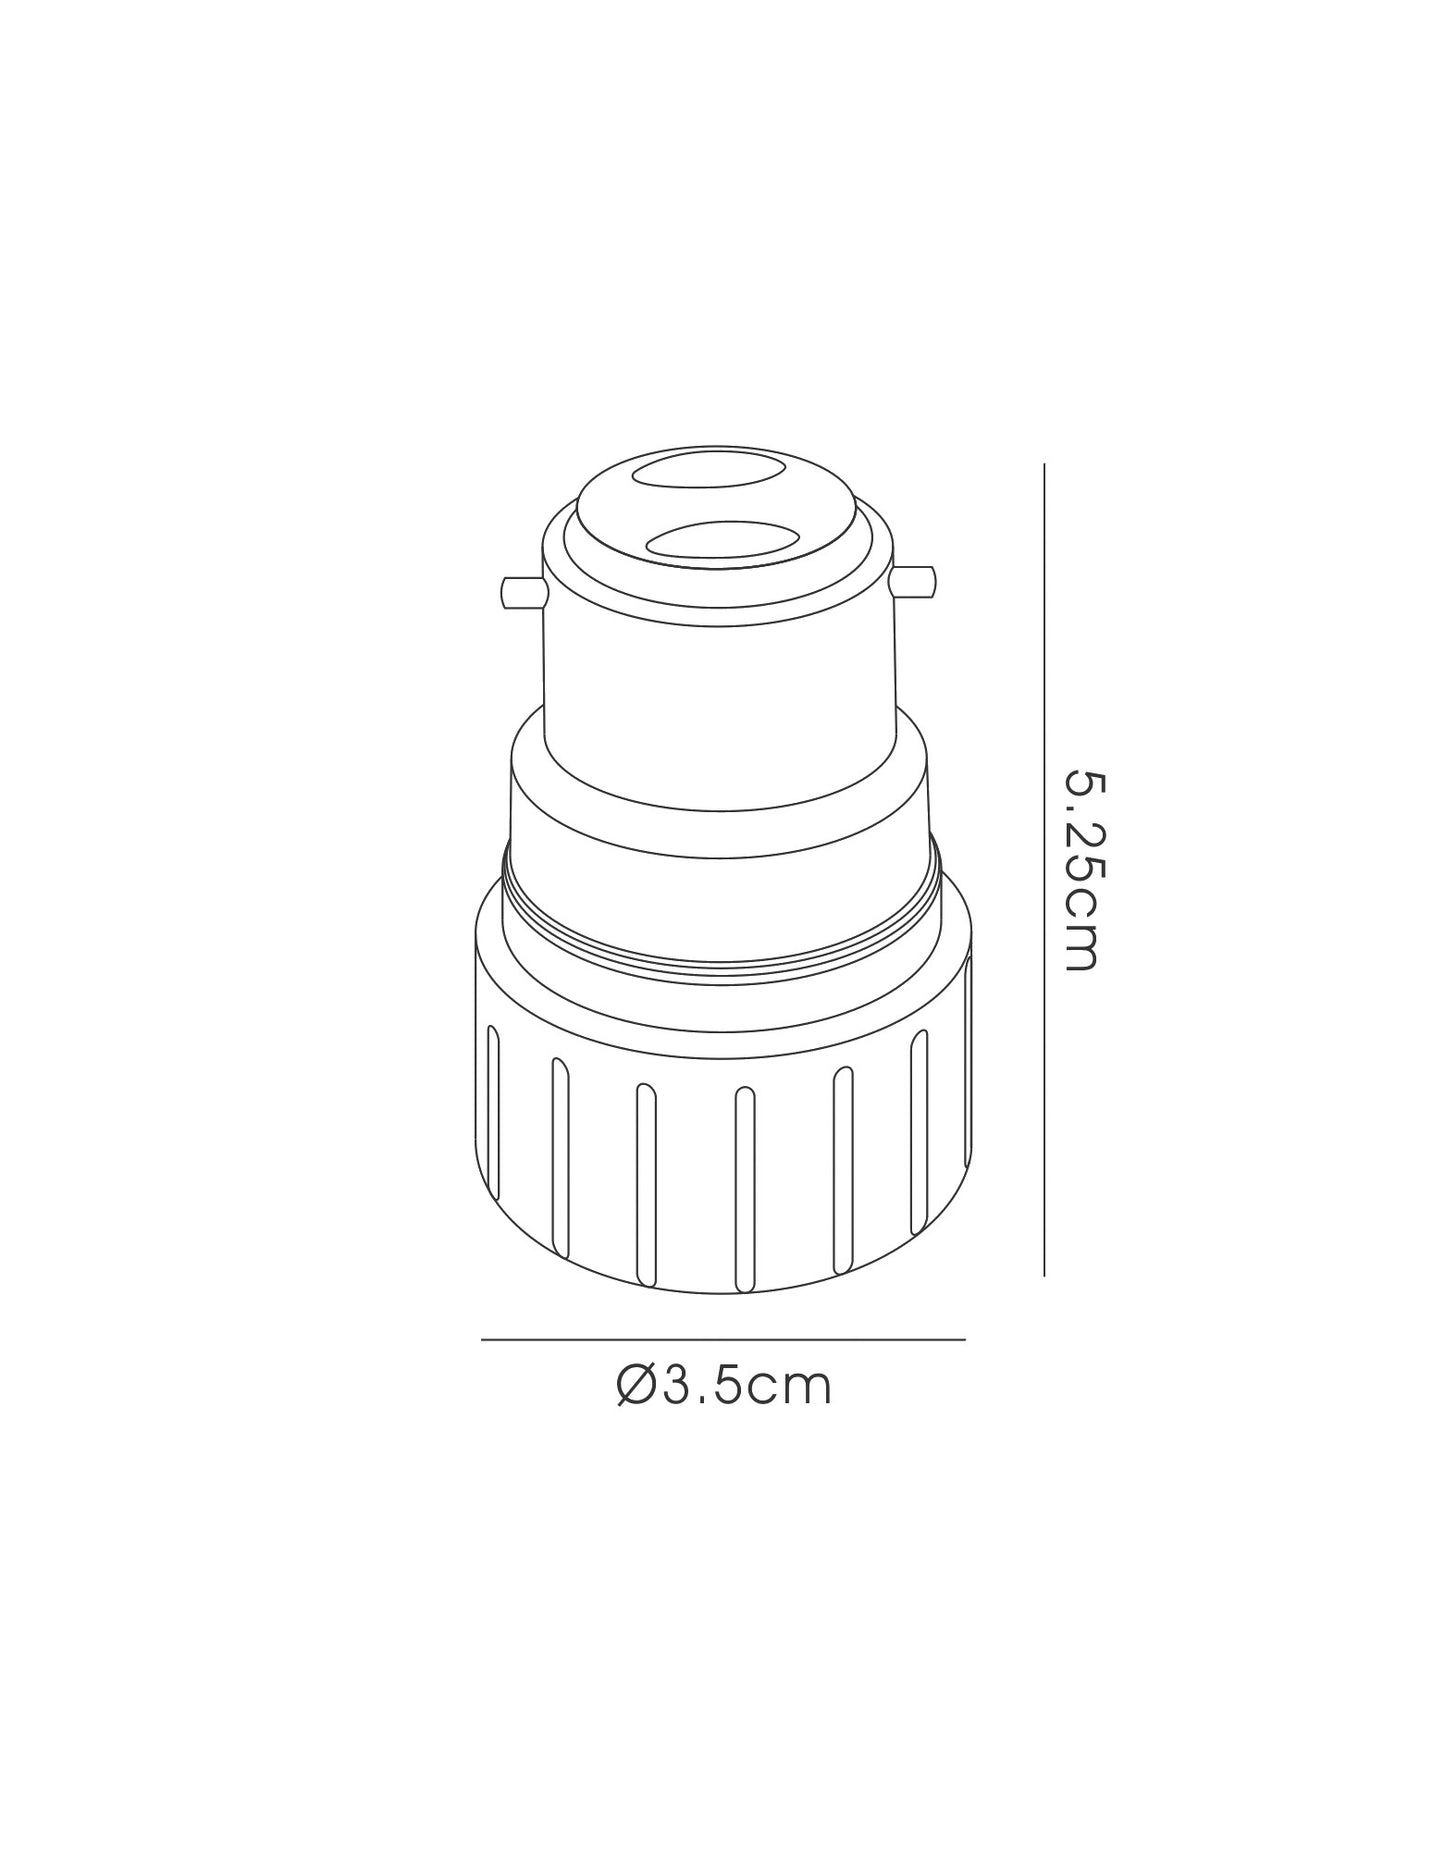 B22 Lampholder to GU10 Lamp Socket Converter